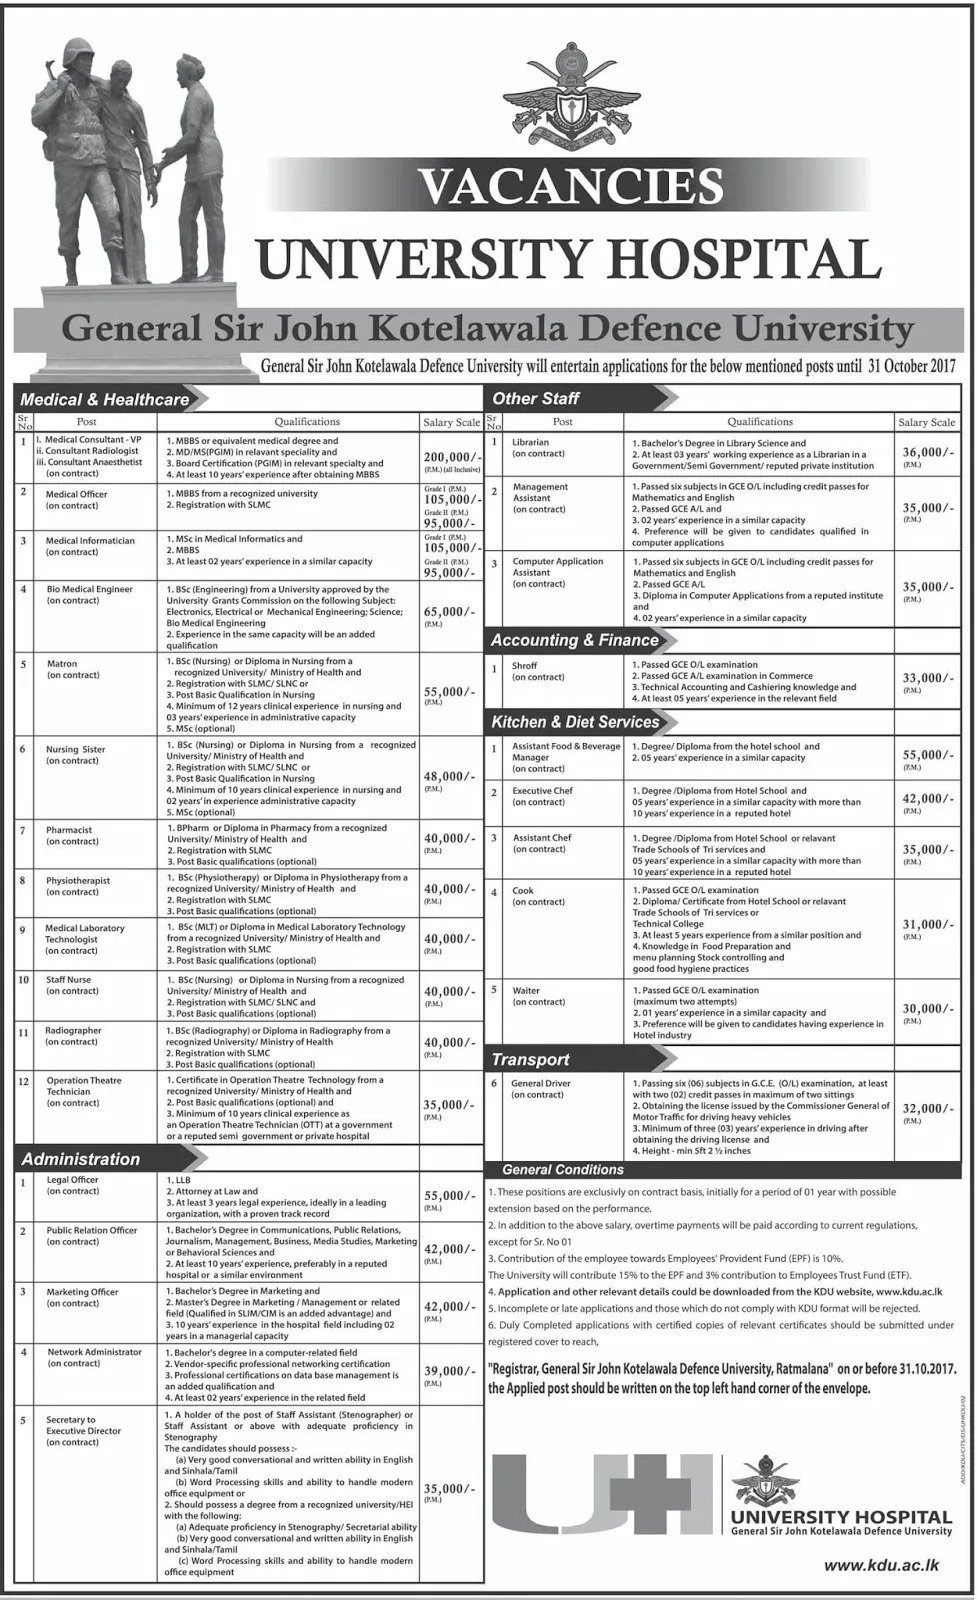 General Sir John Kotelawala Defence University Hospital Vacancies